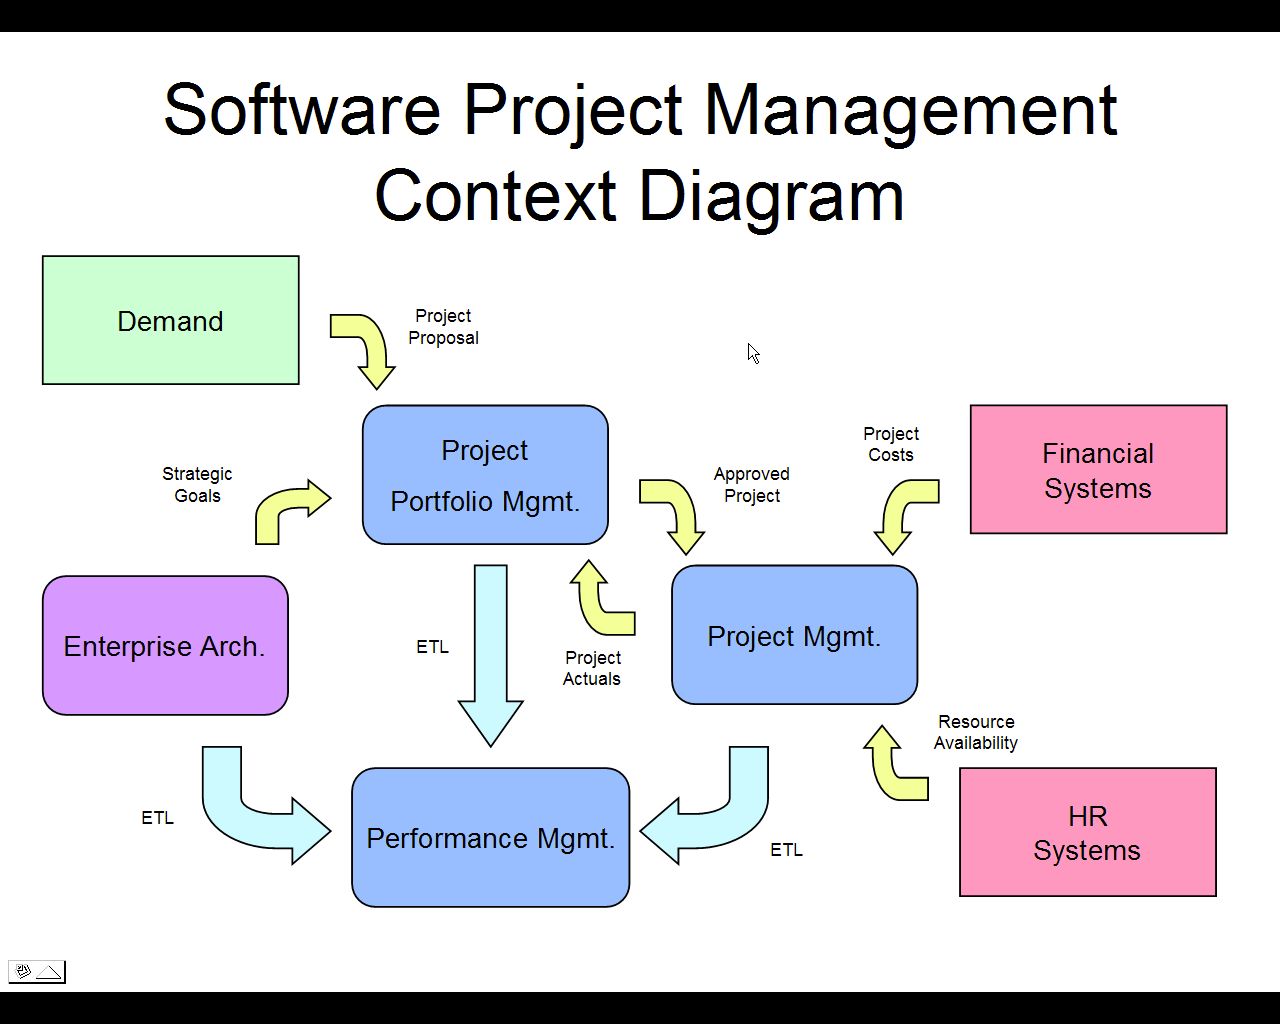 Software project management context diagram